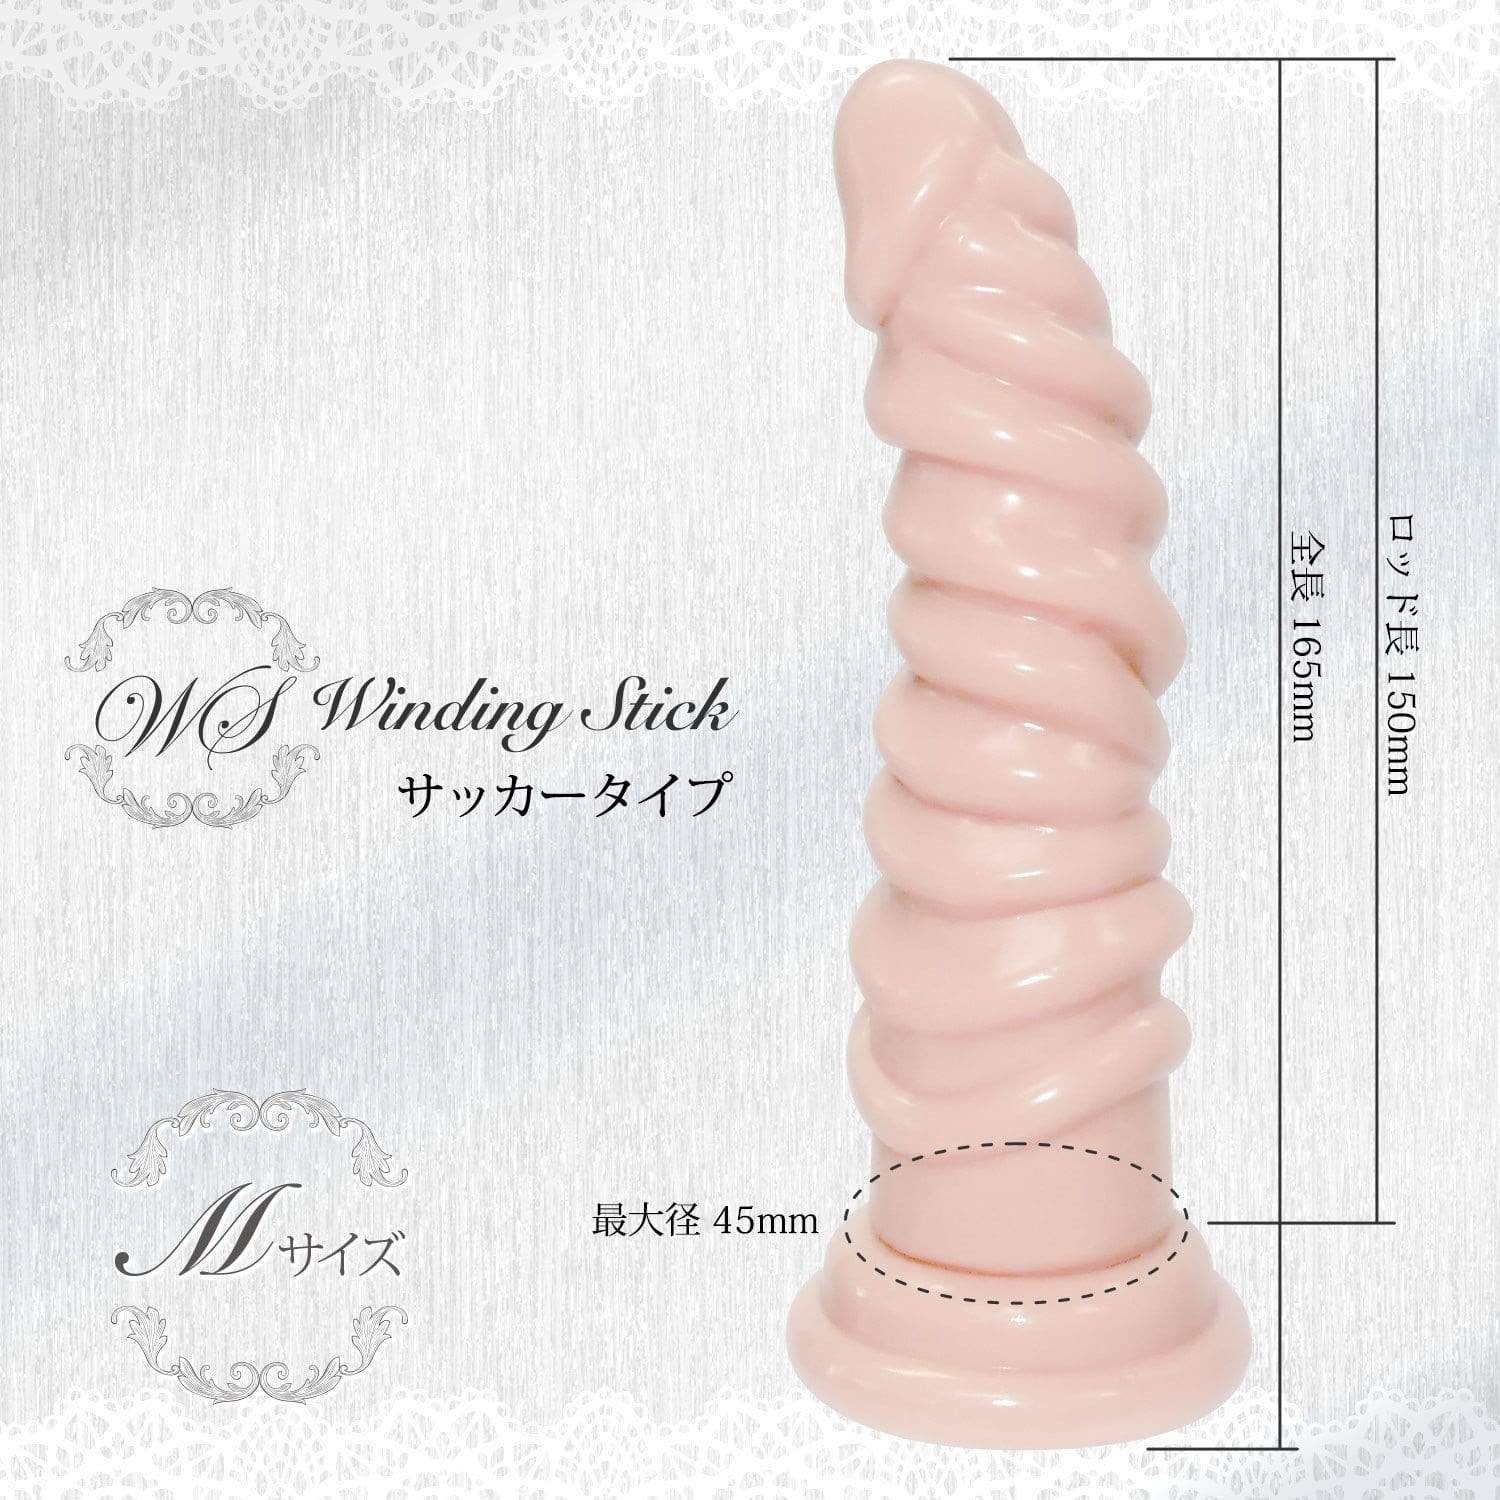 Magic Eyes - Winding Stick Sucker M Dildo (Beige) -  Non Realistic Dildo w/o suction cup (Non Vibration)  Durio.sg